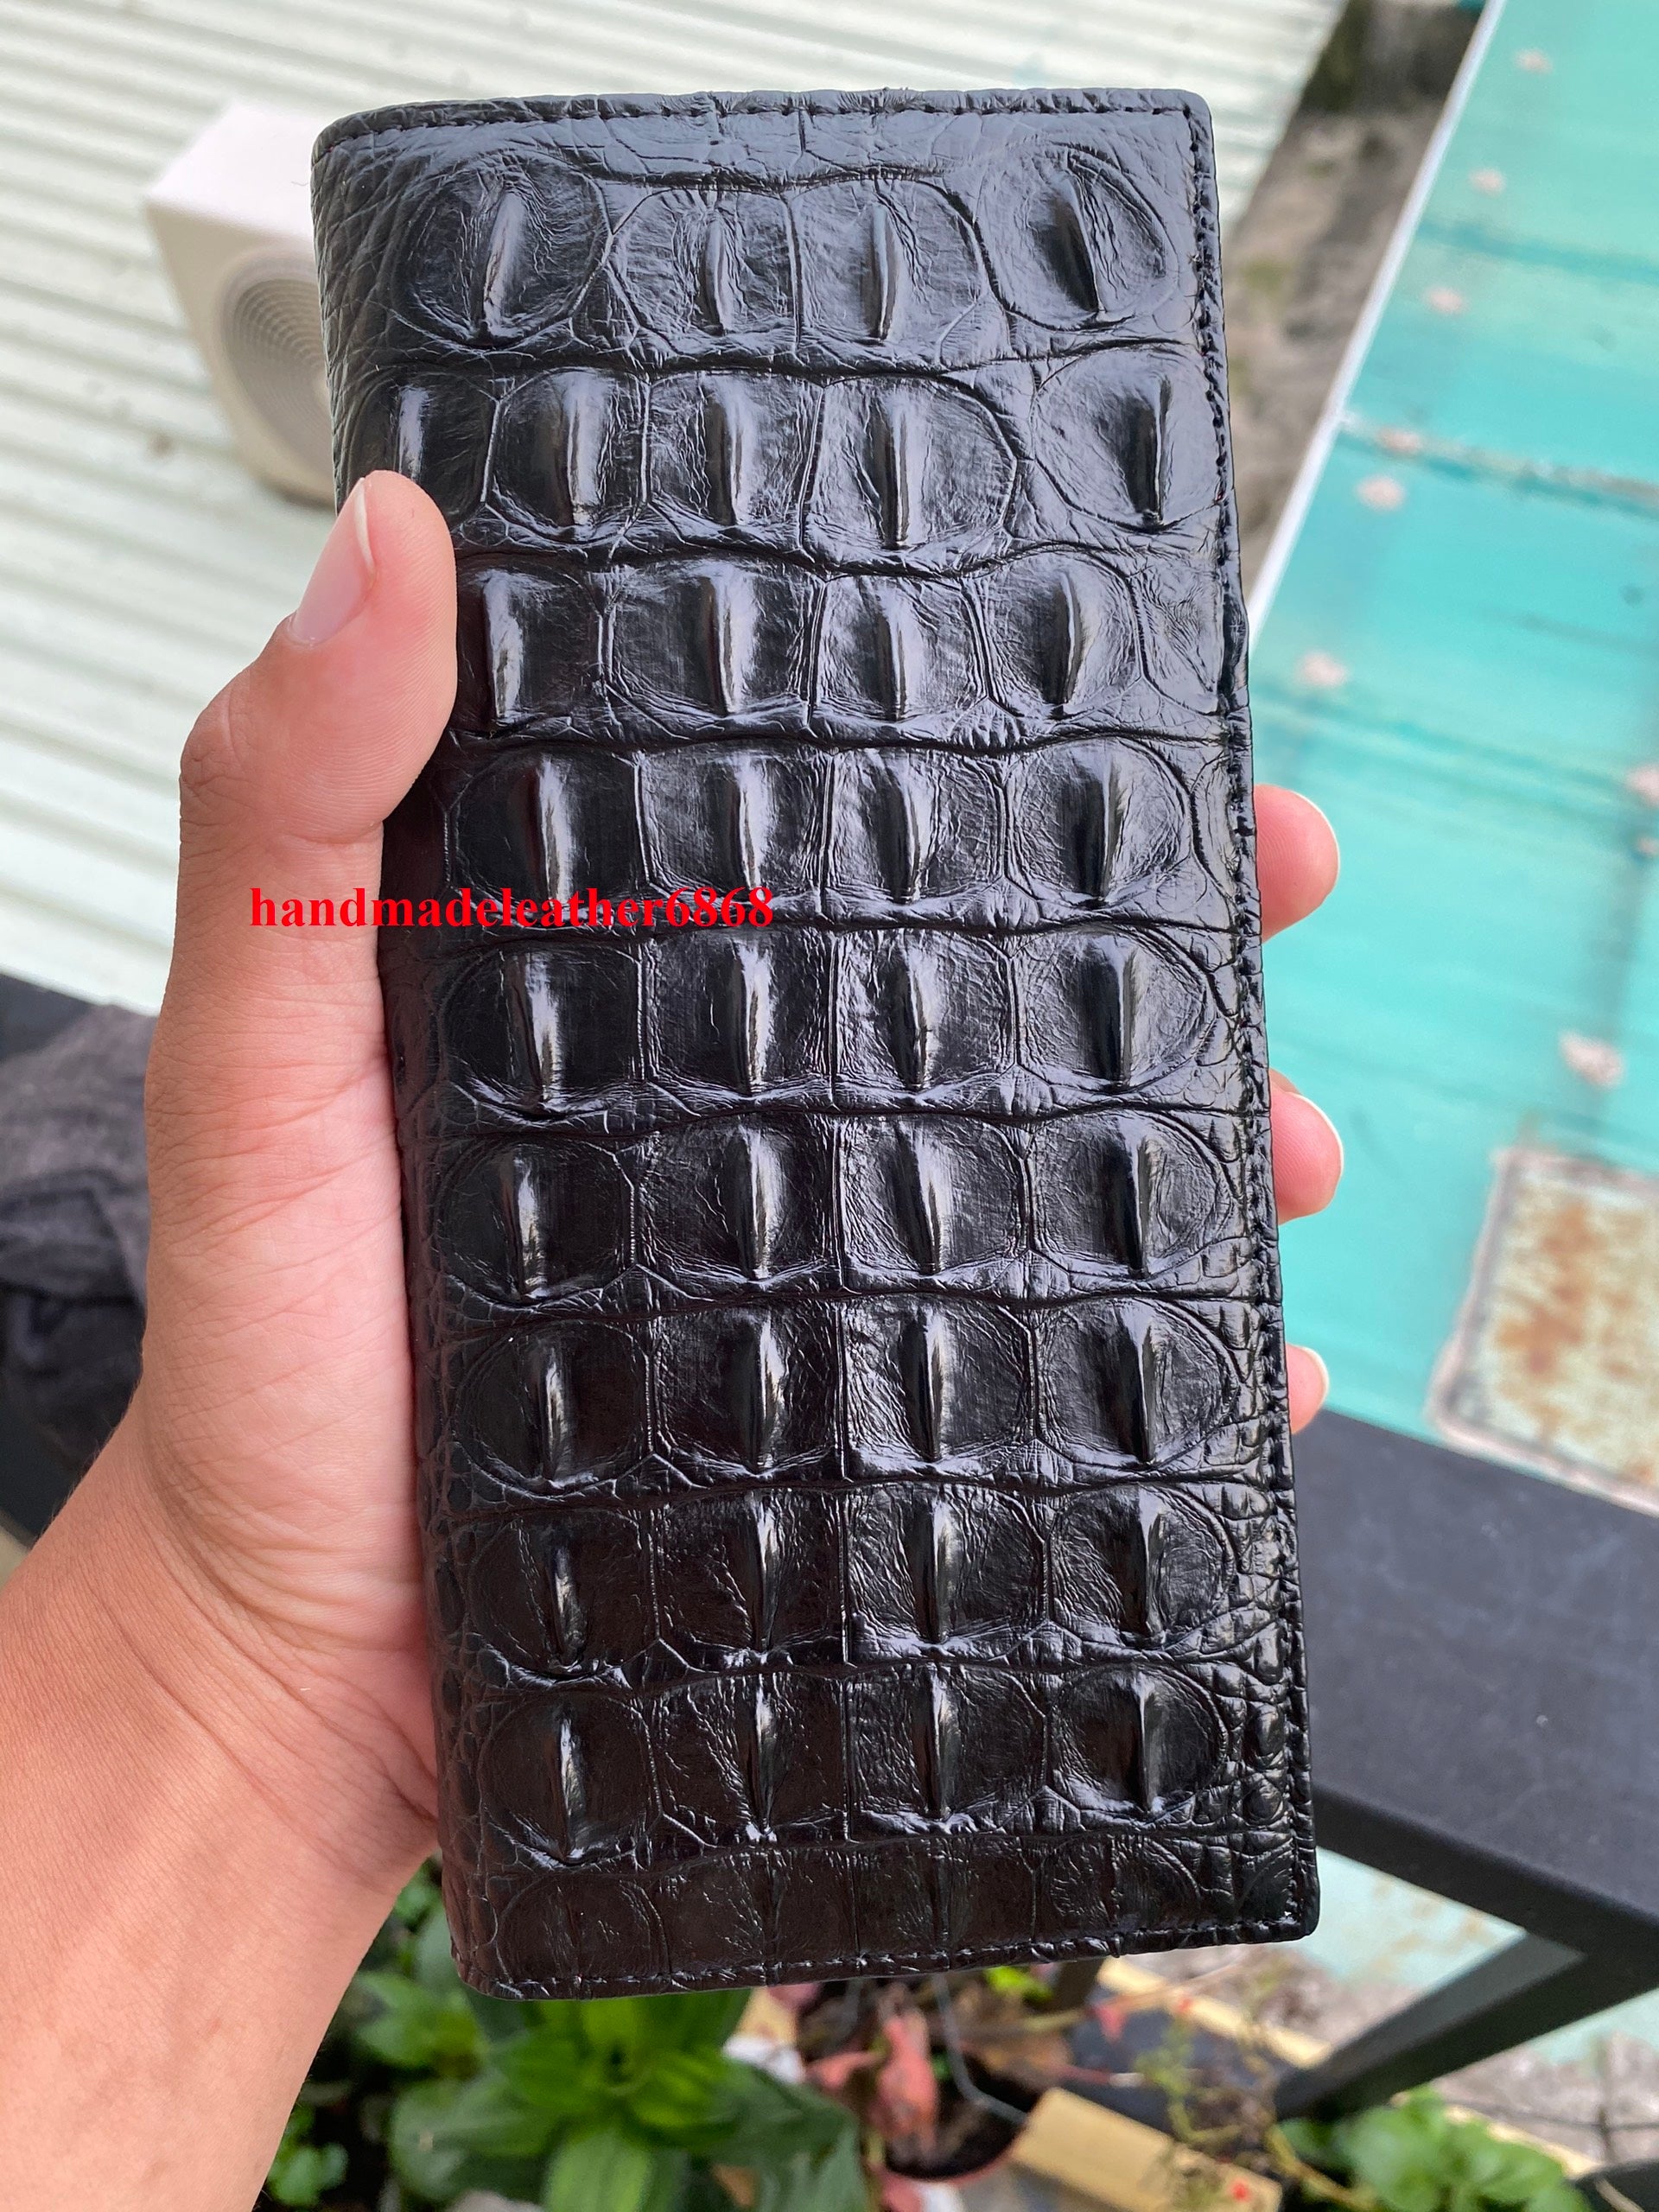 BROWN Card Holder Wallet Double Side Crocodile handmade, Genuine Alligator  Skin